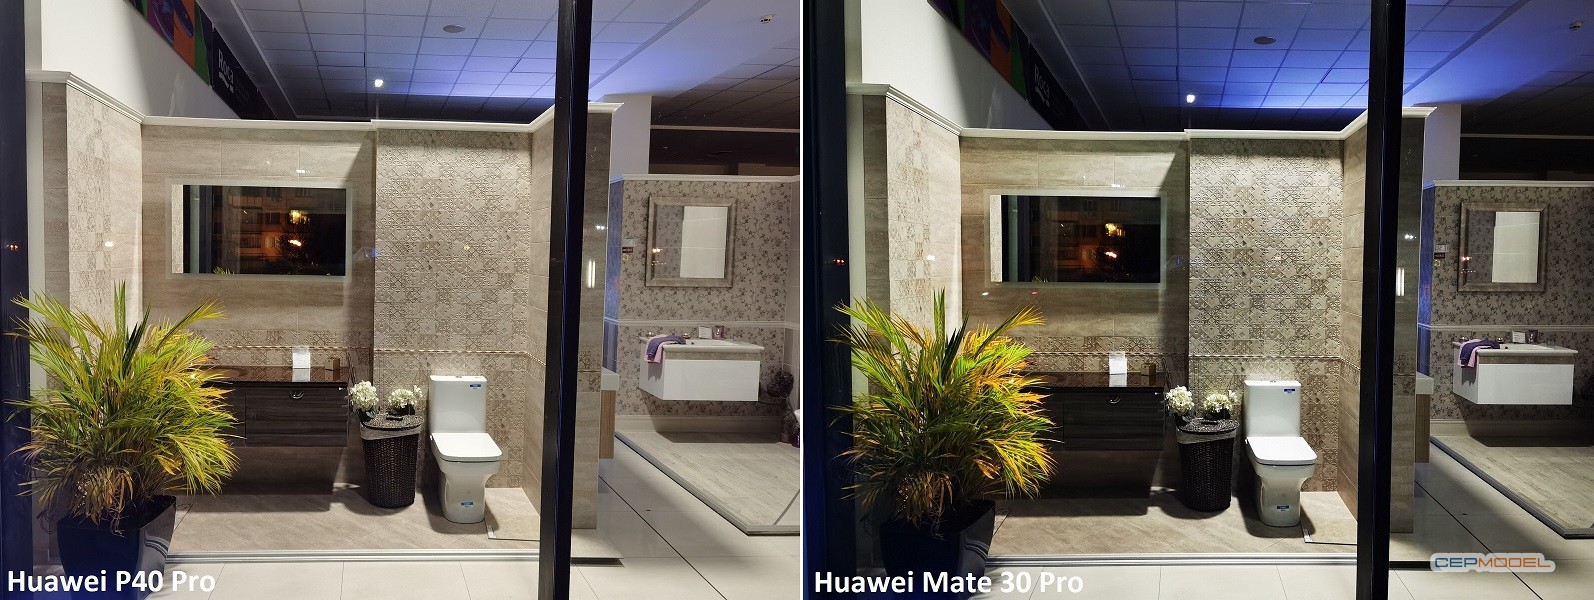 P40 Pro vs Mate P30 Pro Kamera Karsilastirmasi - Huawei P40 Pro İnceleme